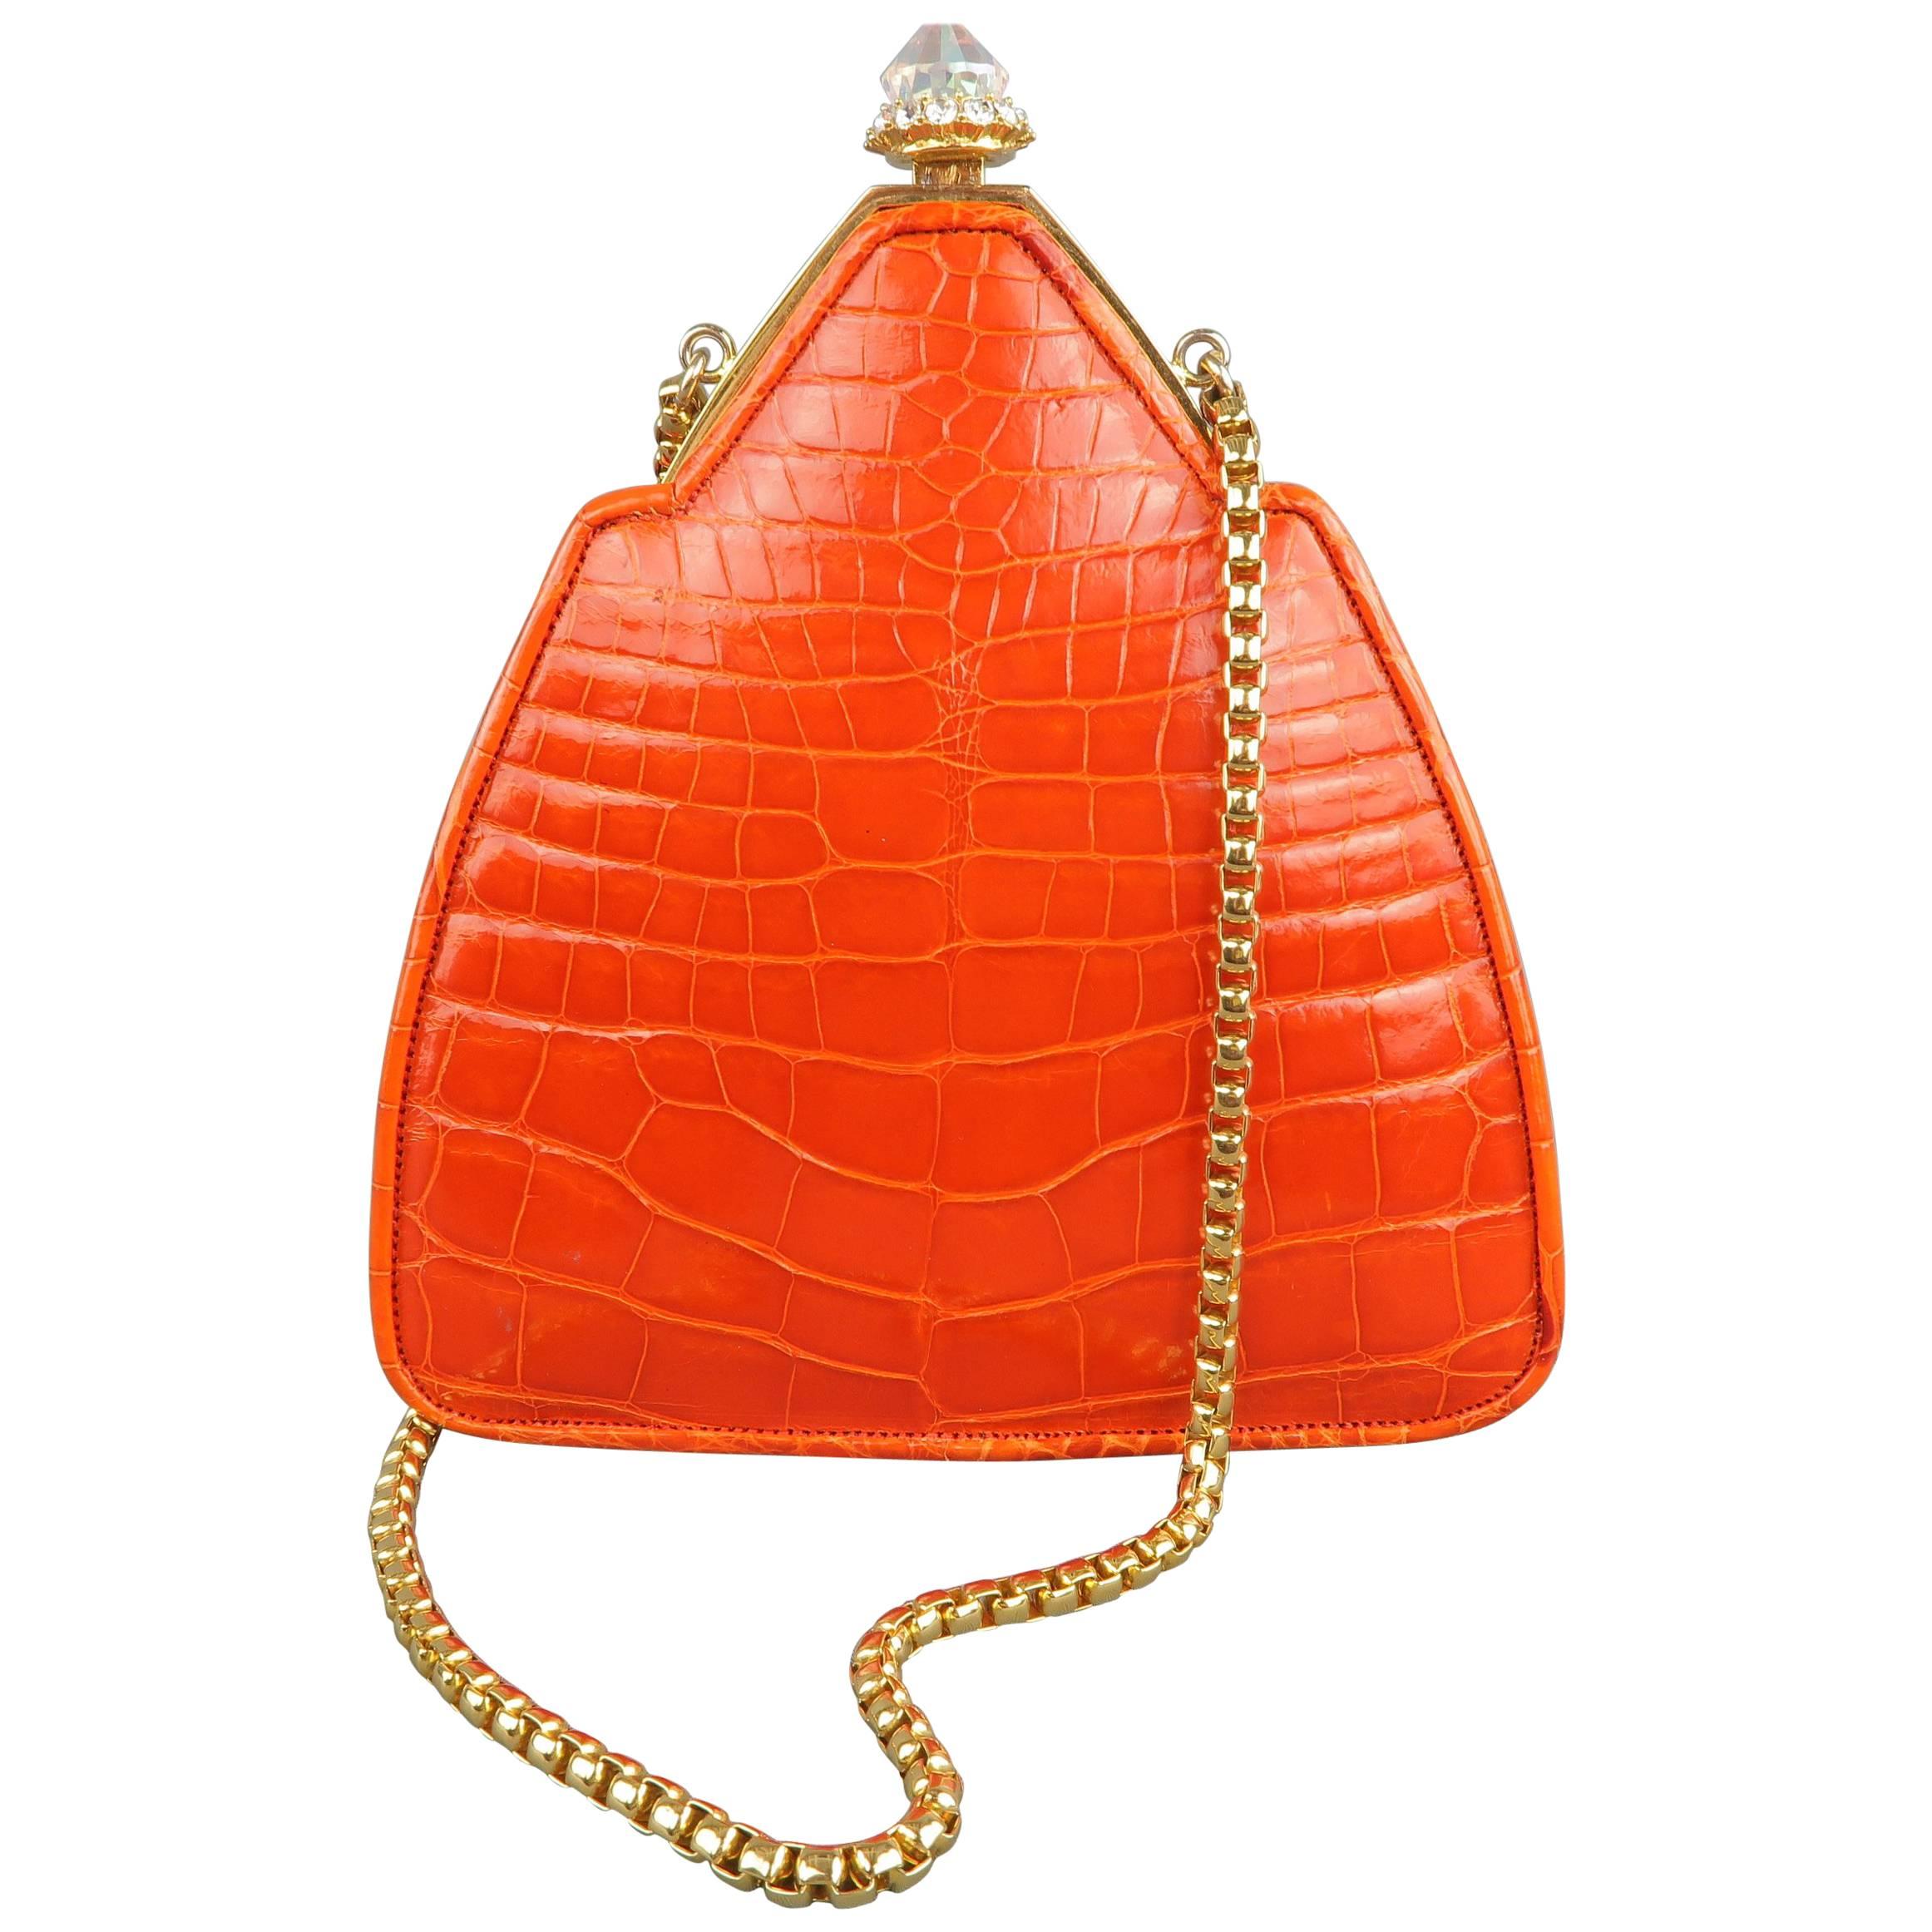 Judith Lieber Handbag Orange Alligator Leather Aurora Borealis Gold Chain Mini